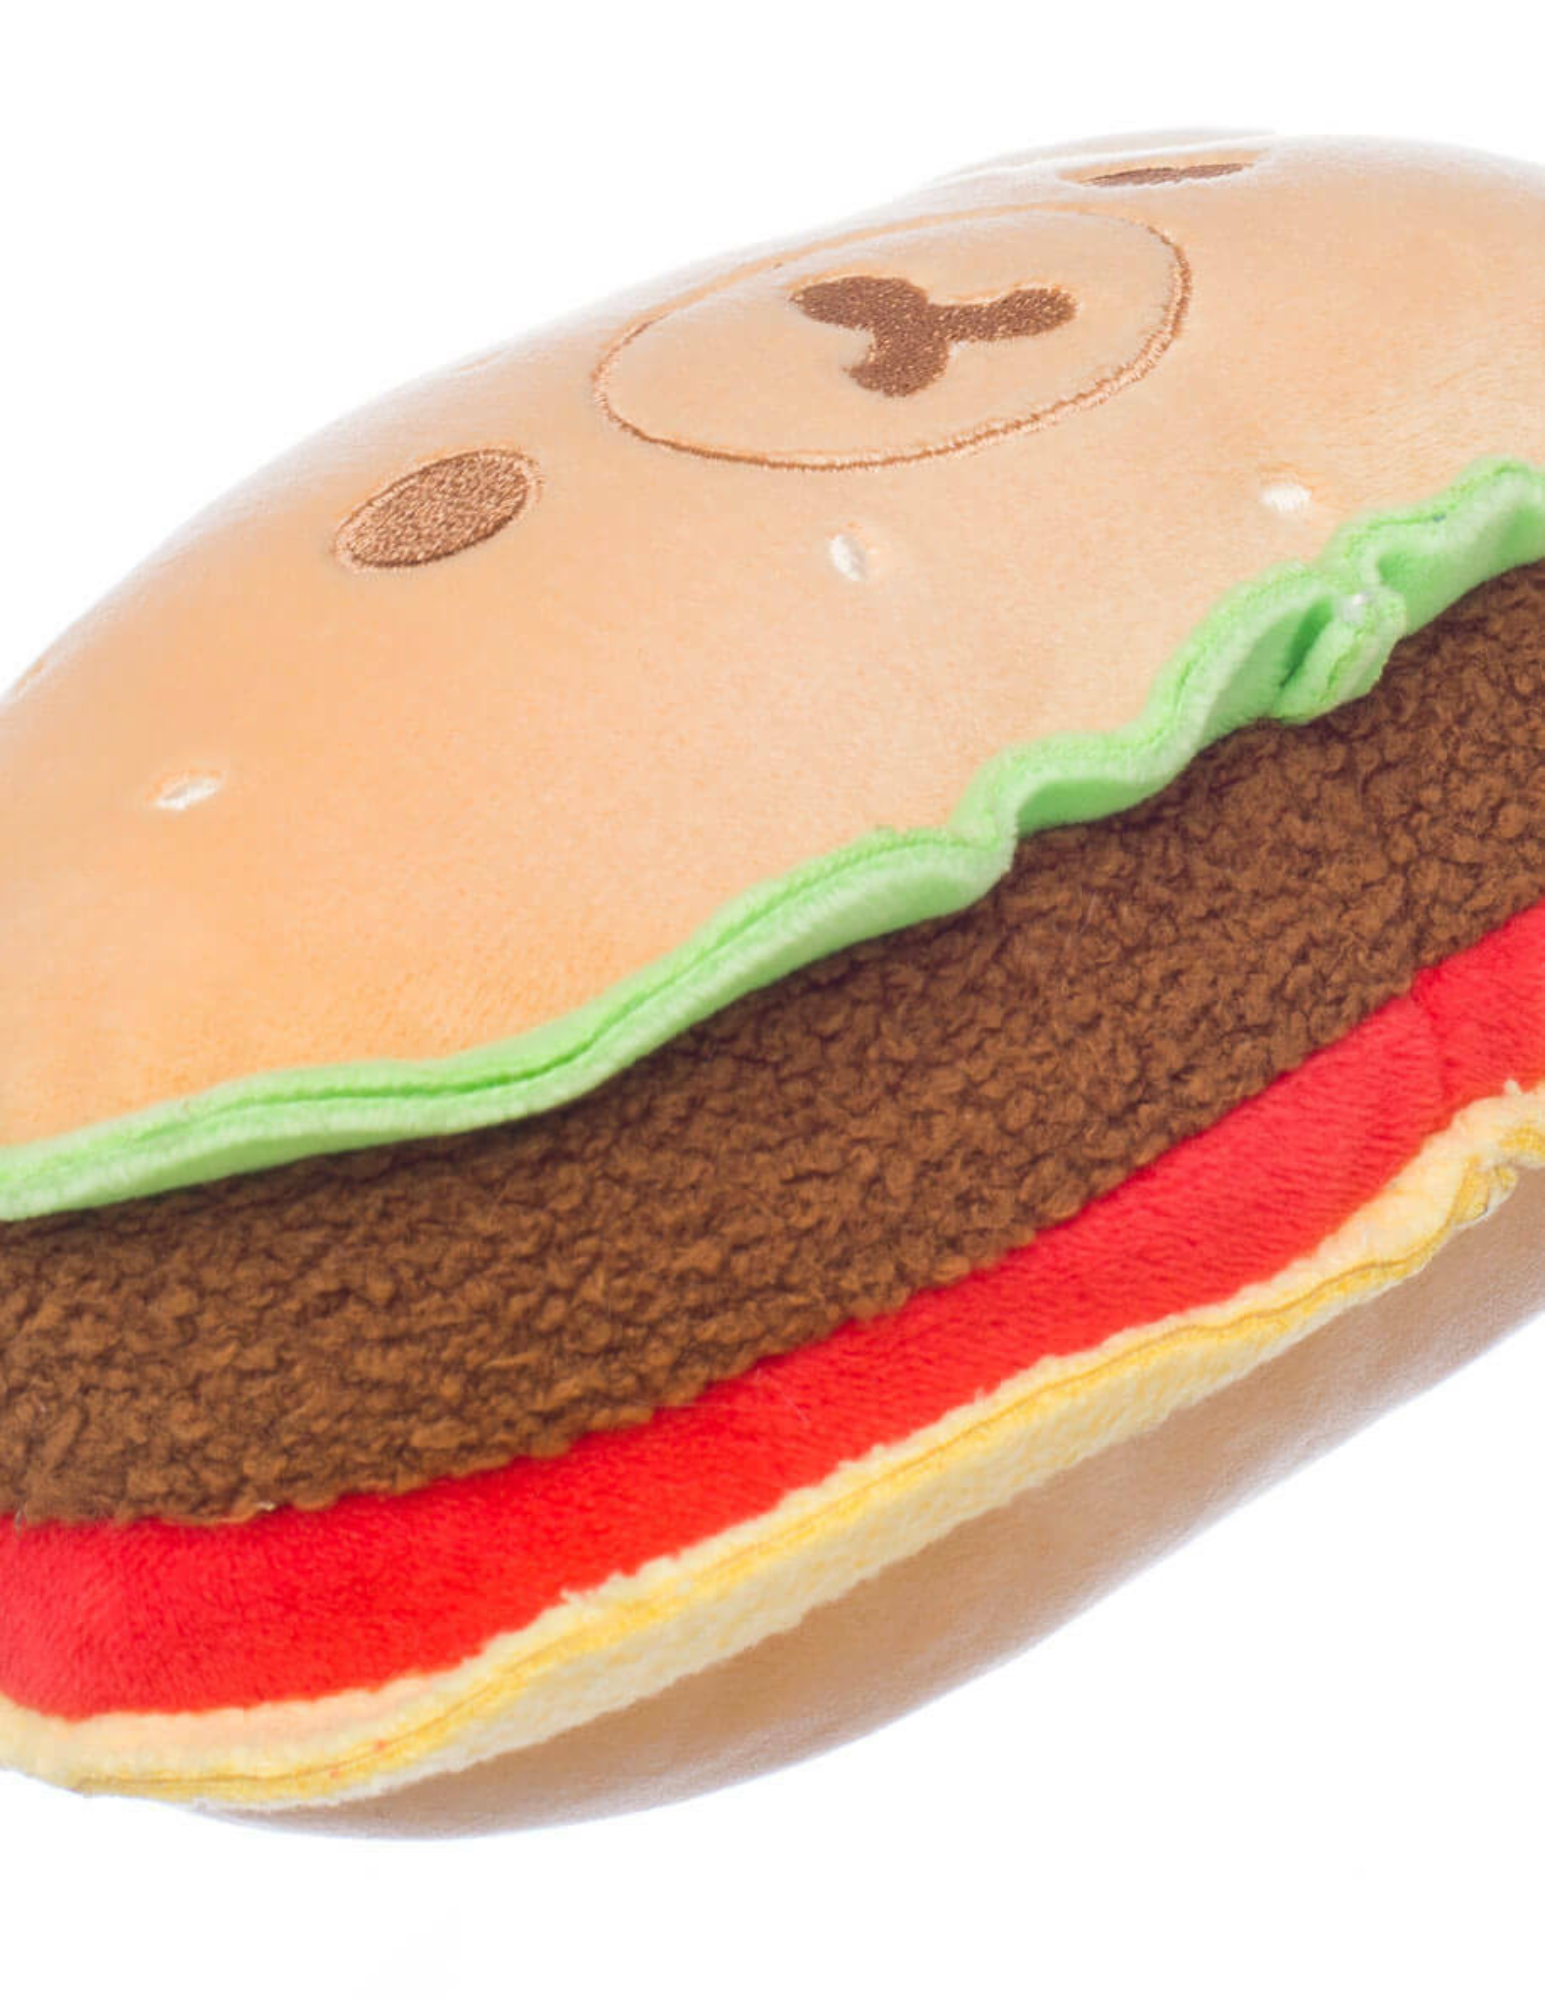 San-X Rilakkuma Original Novelty Burger Plush